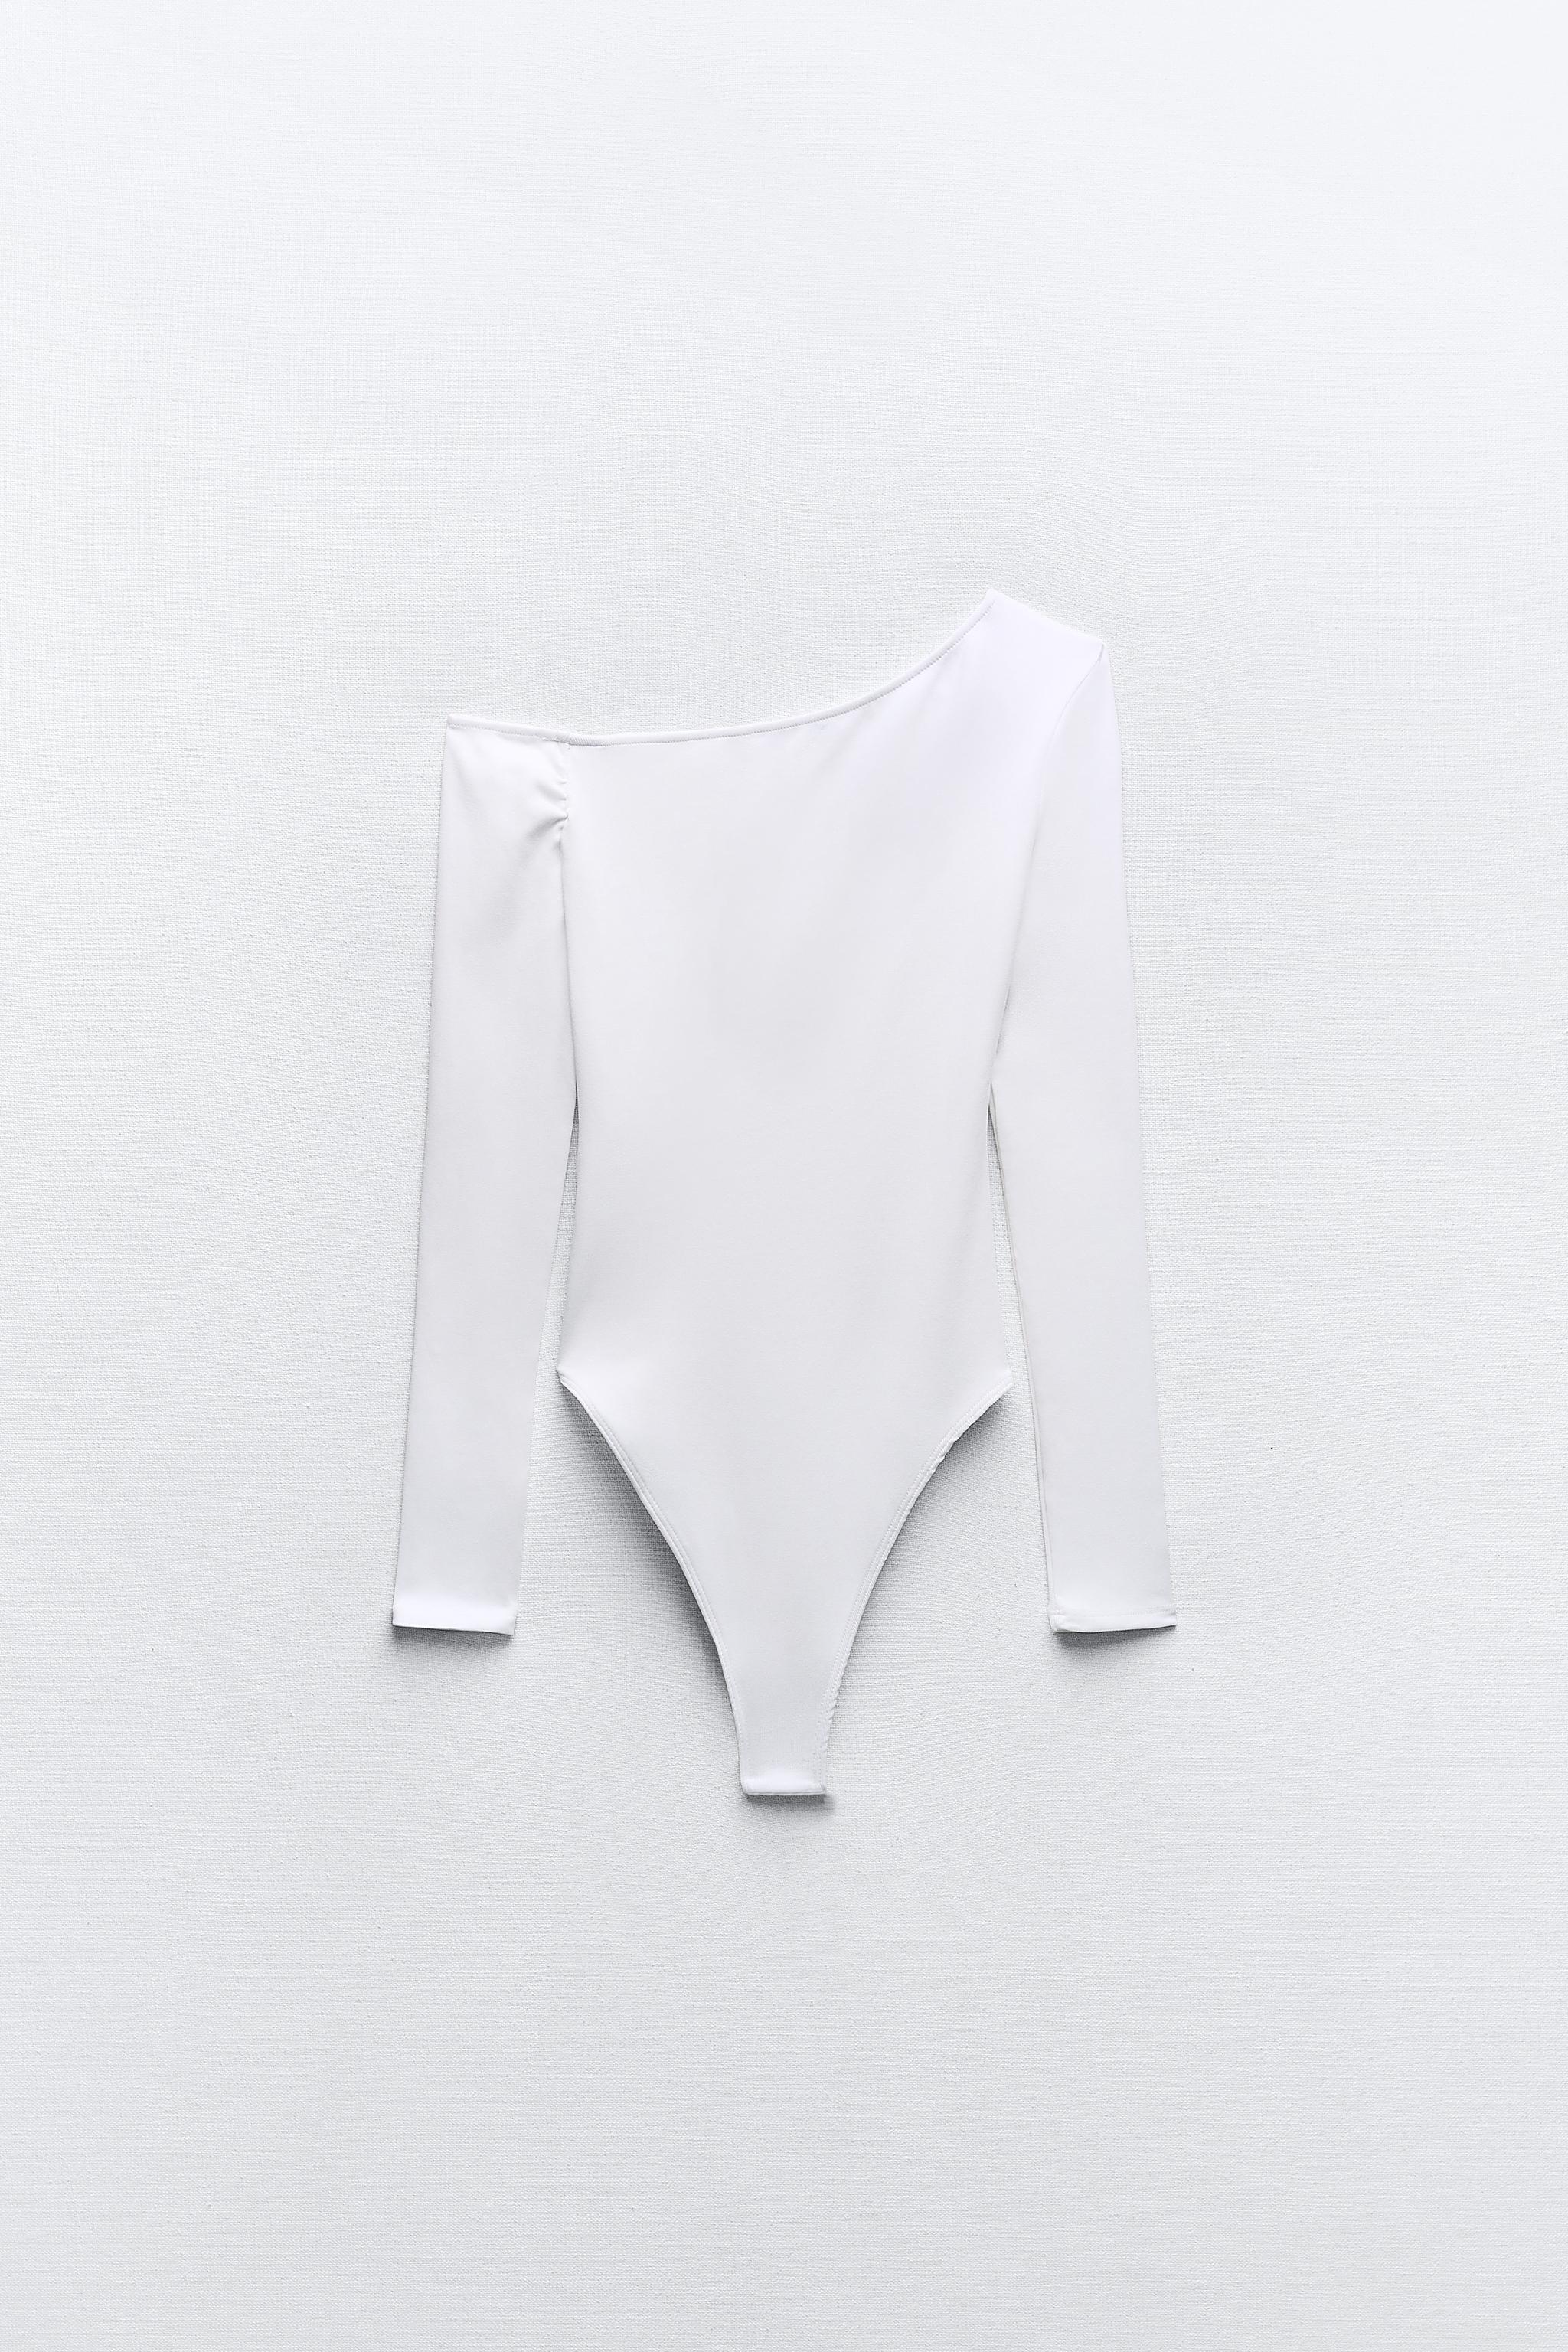 Zara White Rhinestone Corset Bodysuit Women's Size XS